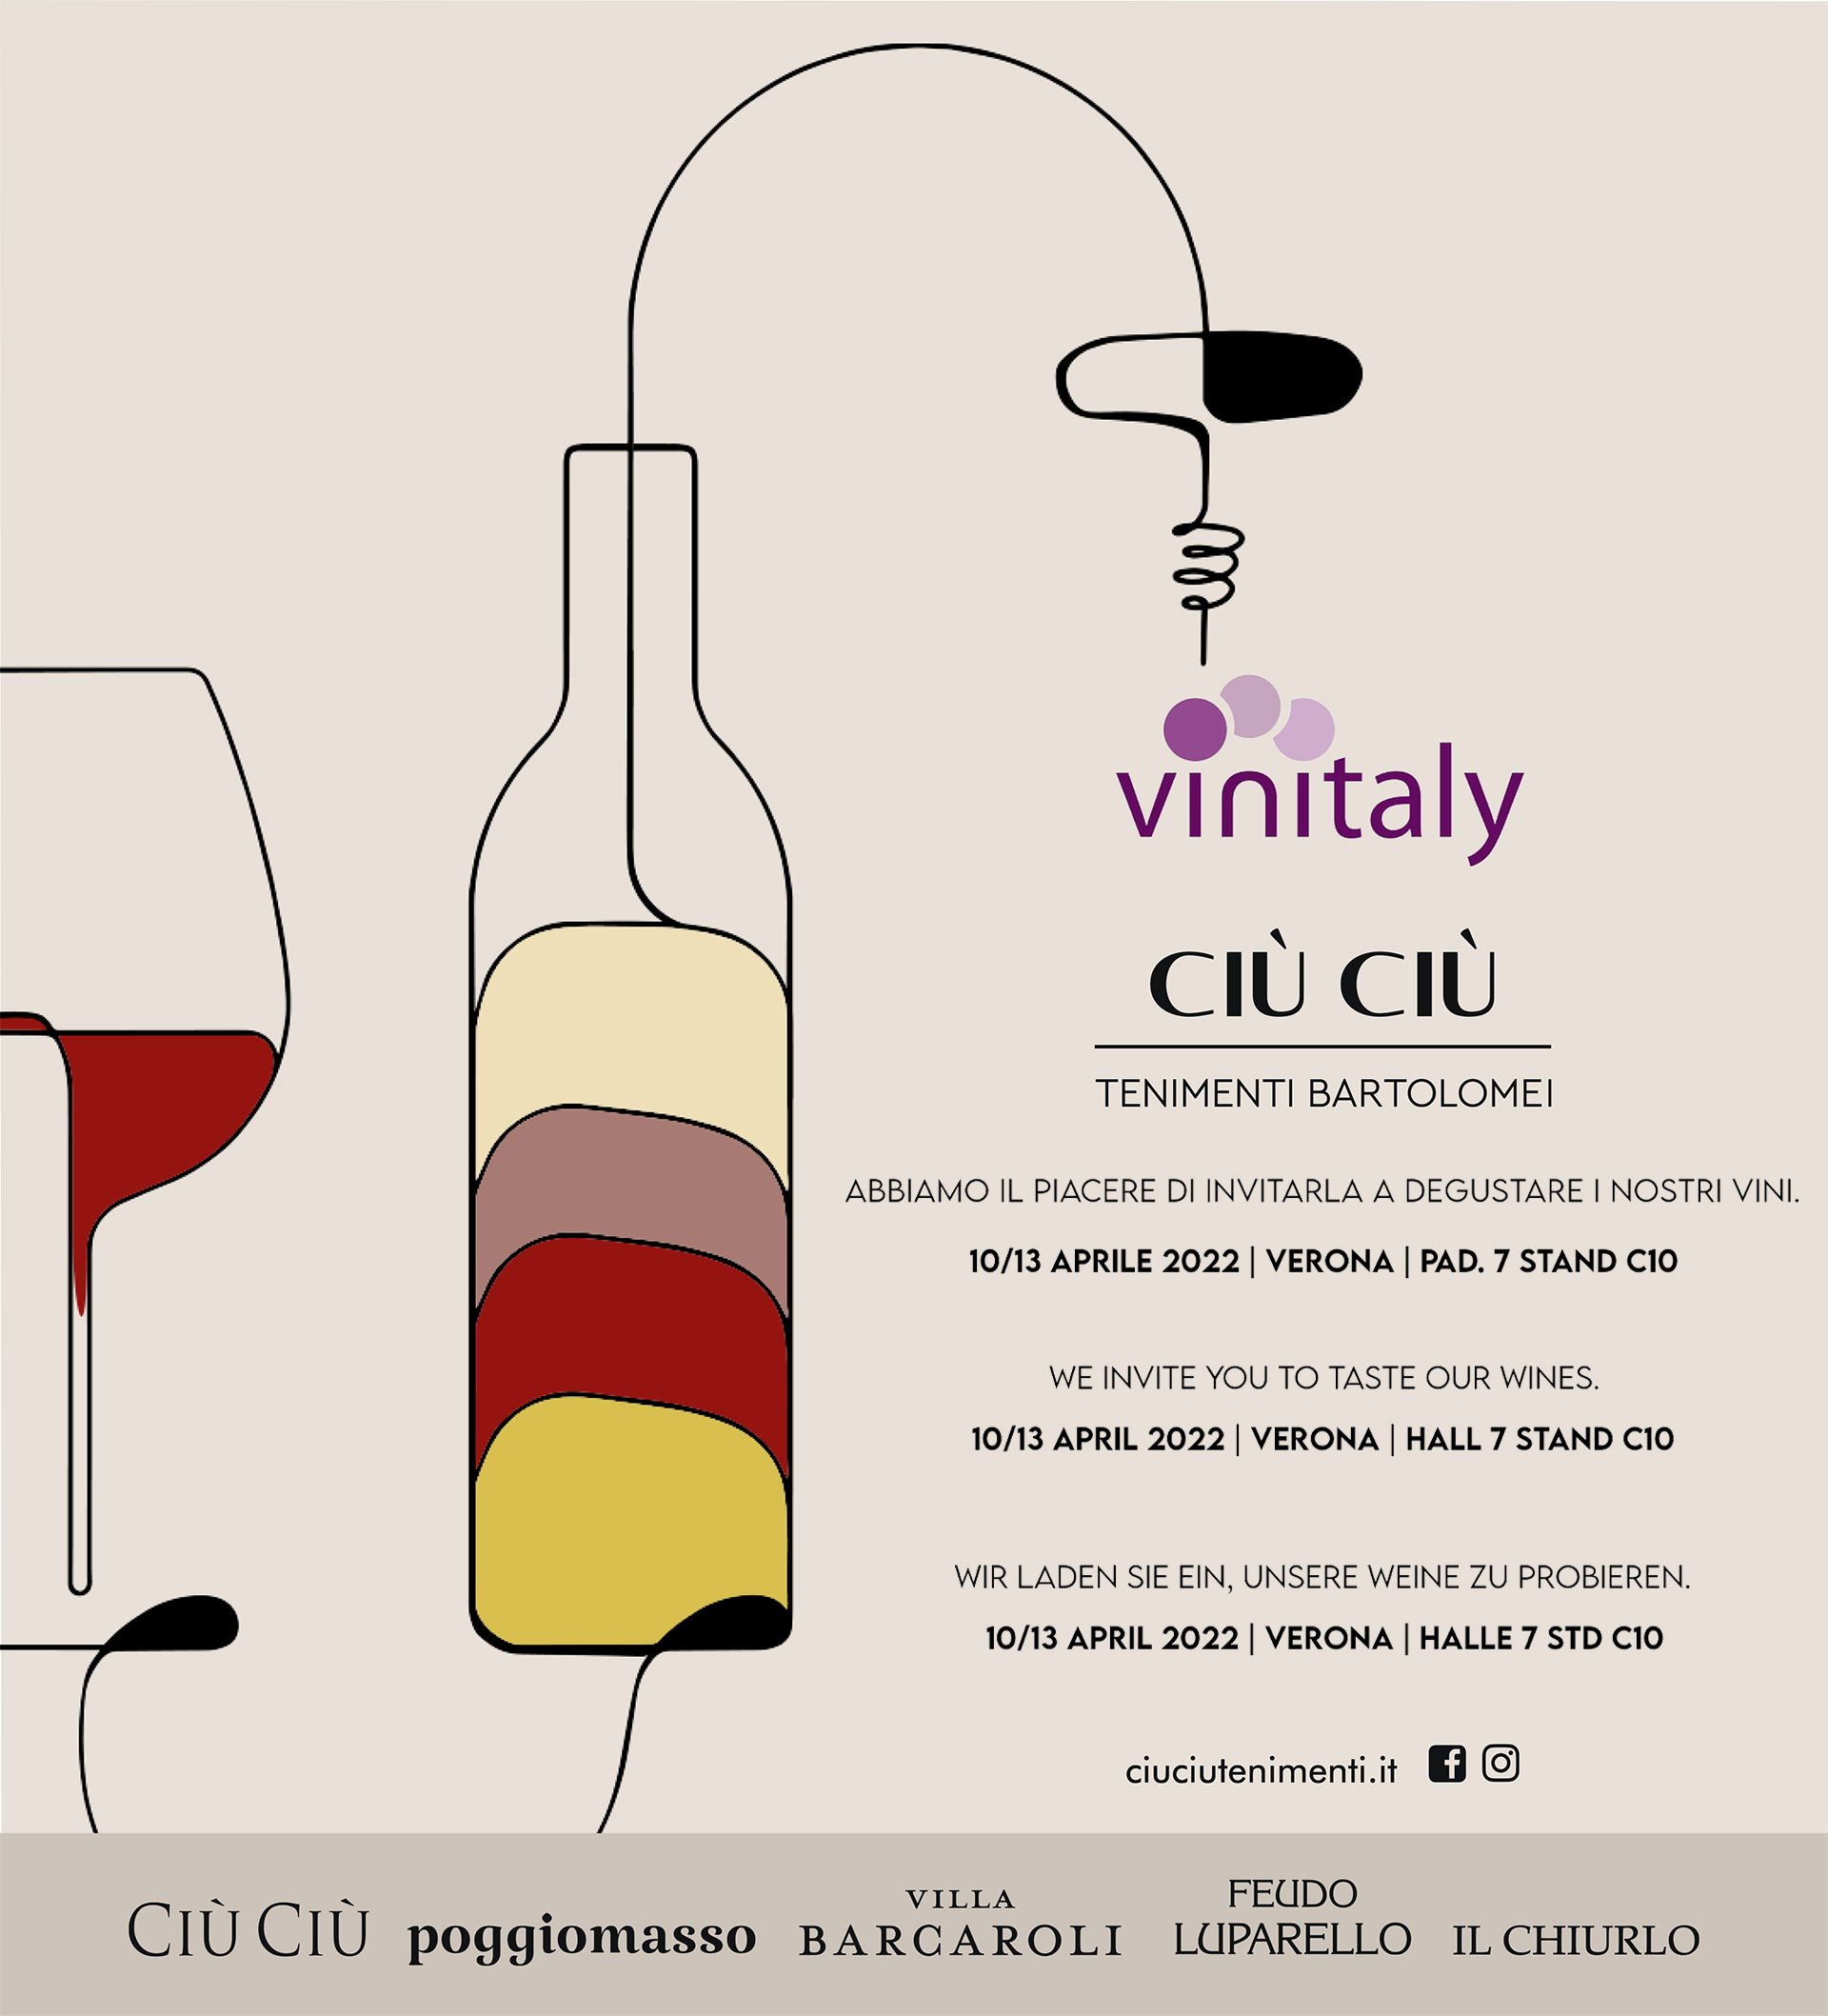 Vinitaly - Verona April 10-13, 2022